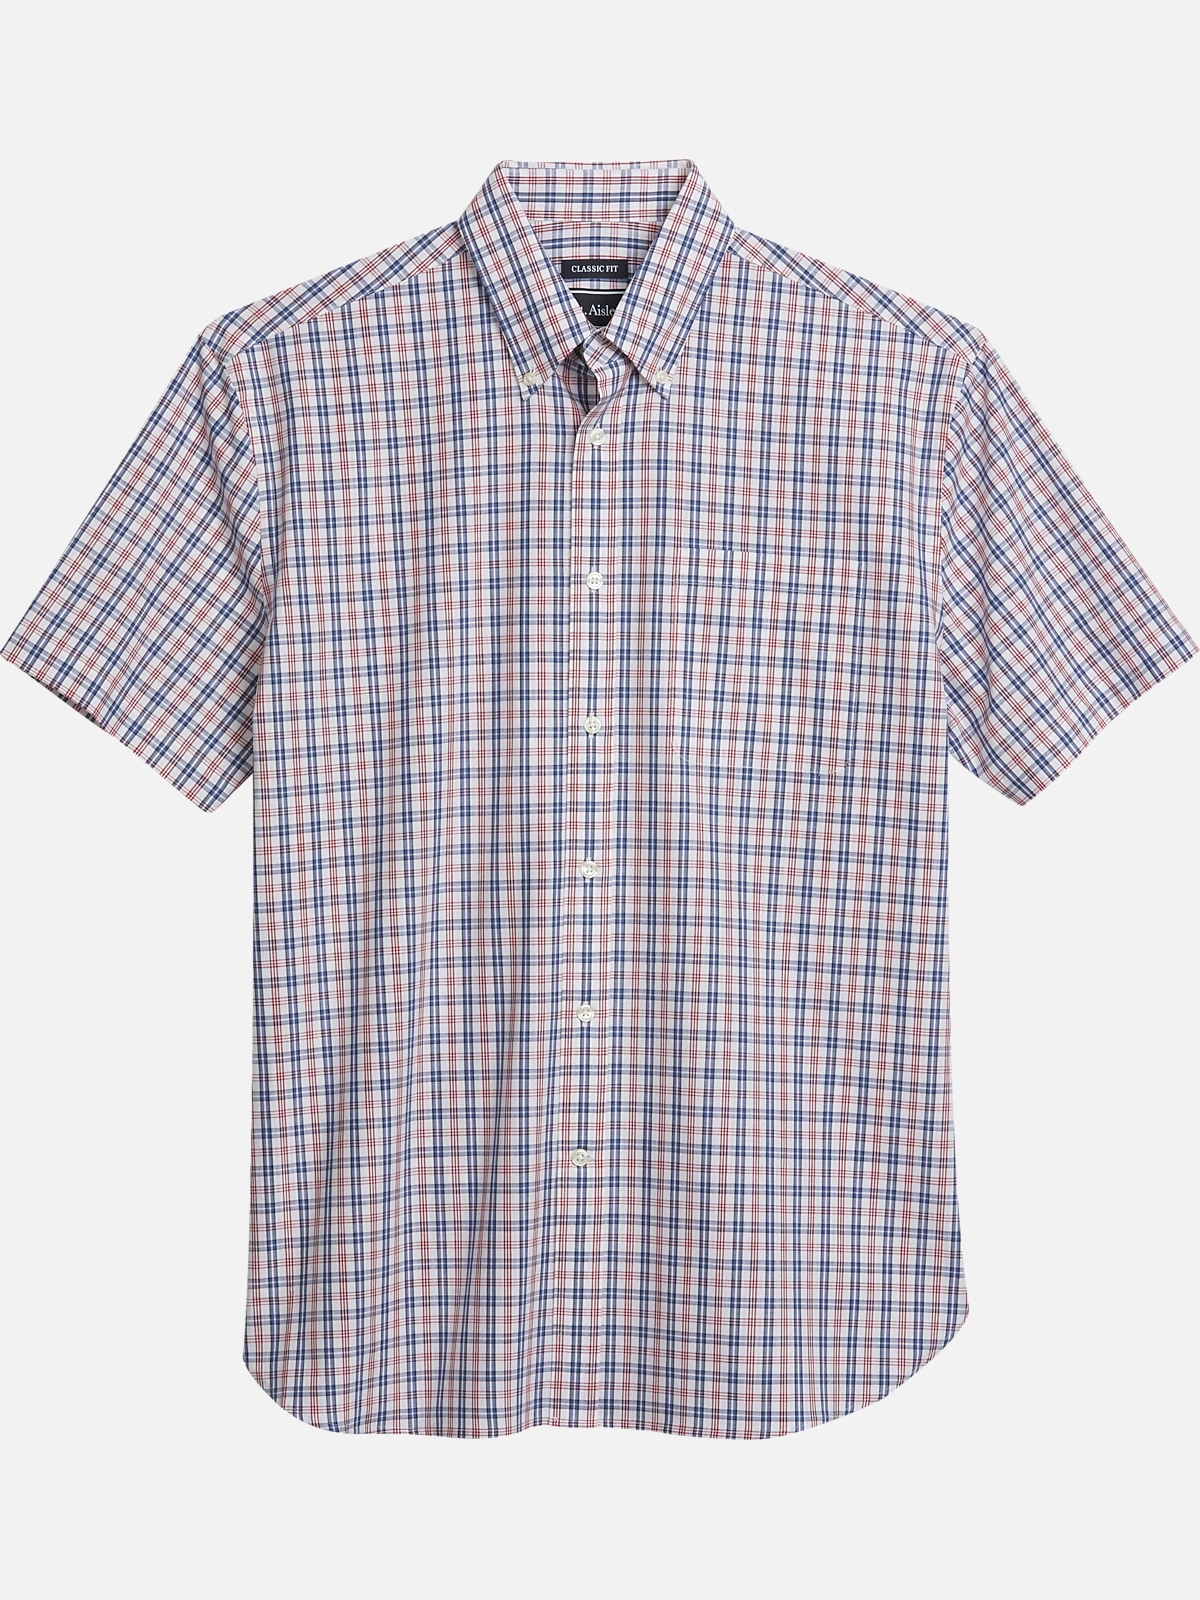 St. Aisle Classic Fit Medium Check Sport Shirt | All Sale| Men's Wearhouse